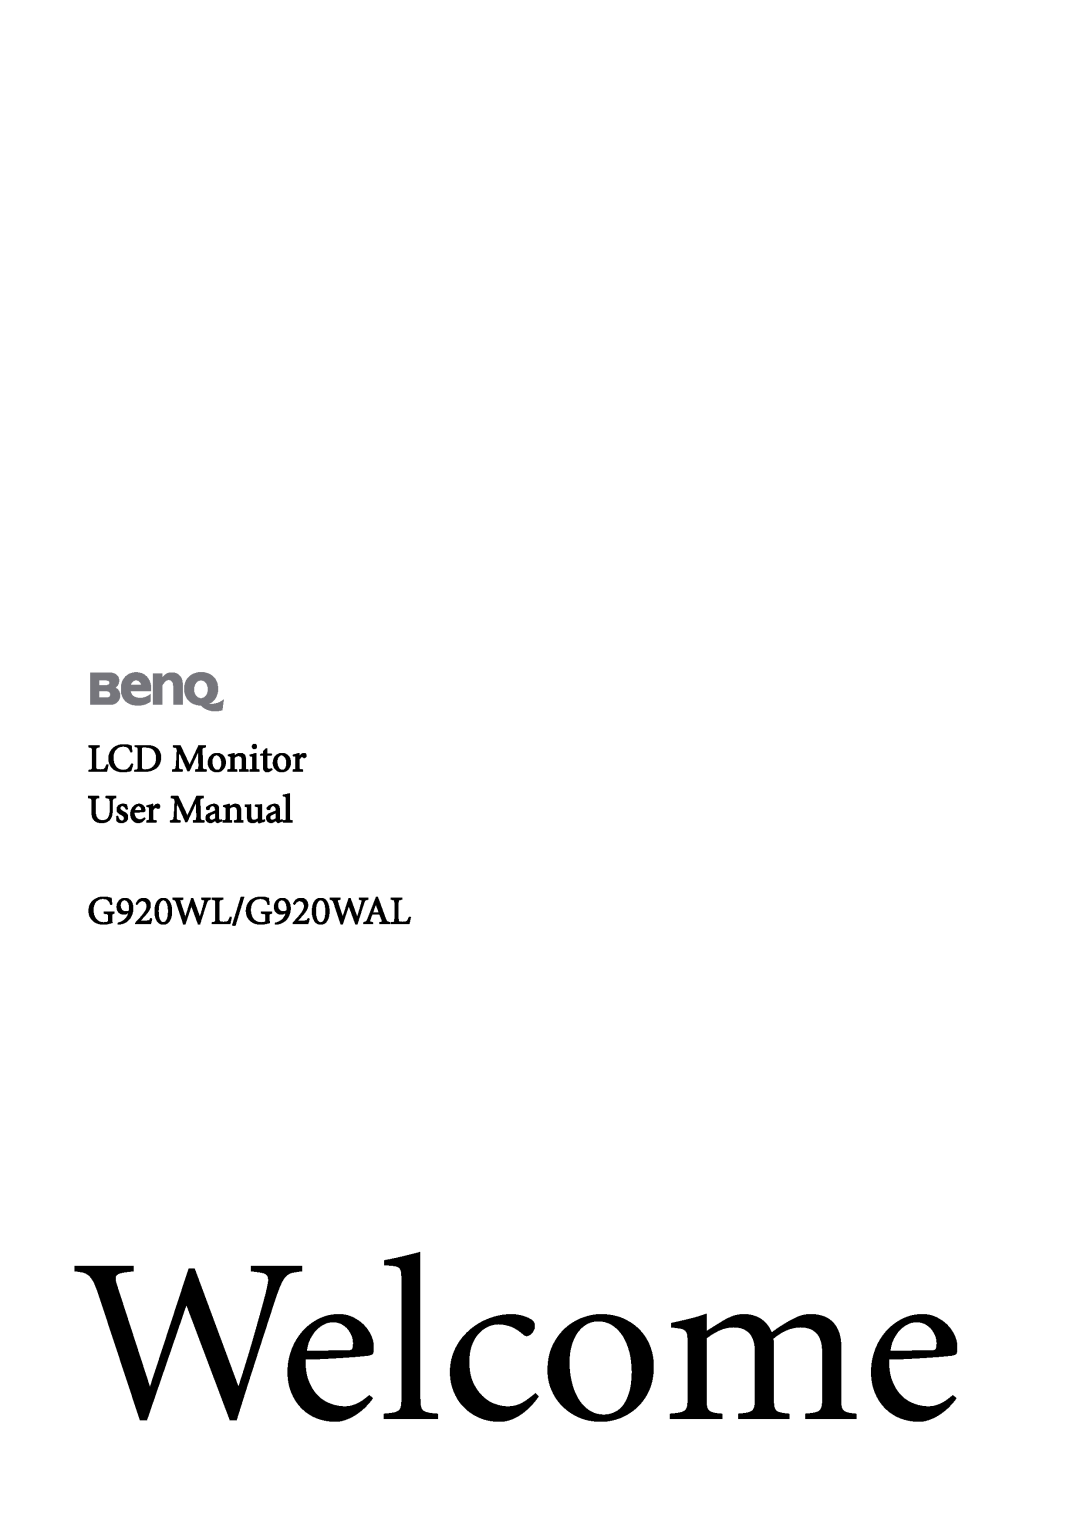 BenQ user manual Welcome, LCD Monitor User Manual G920WL/G920WAL 